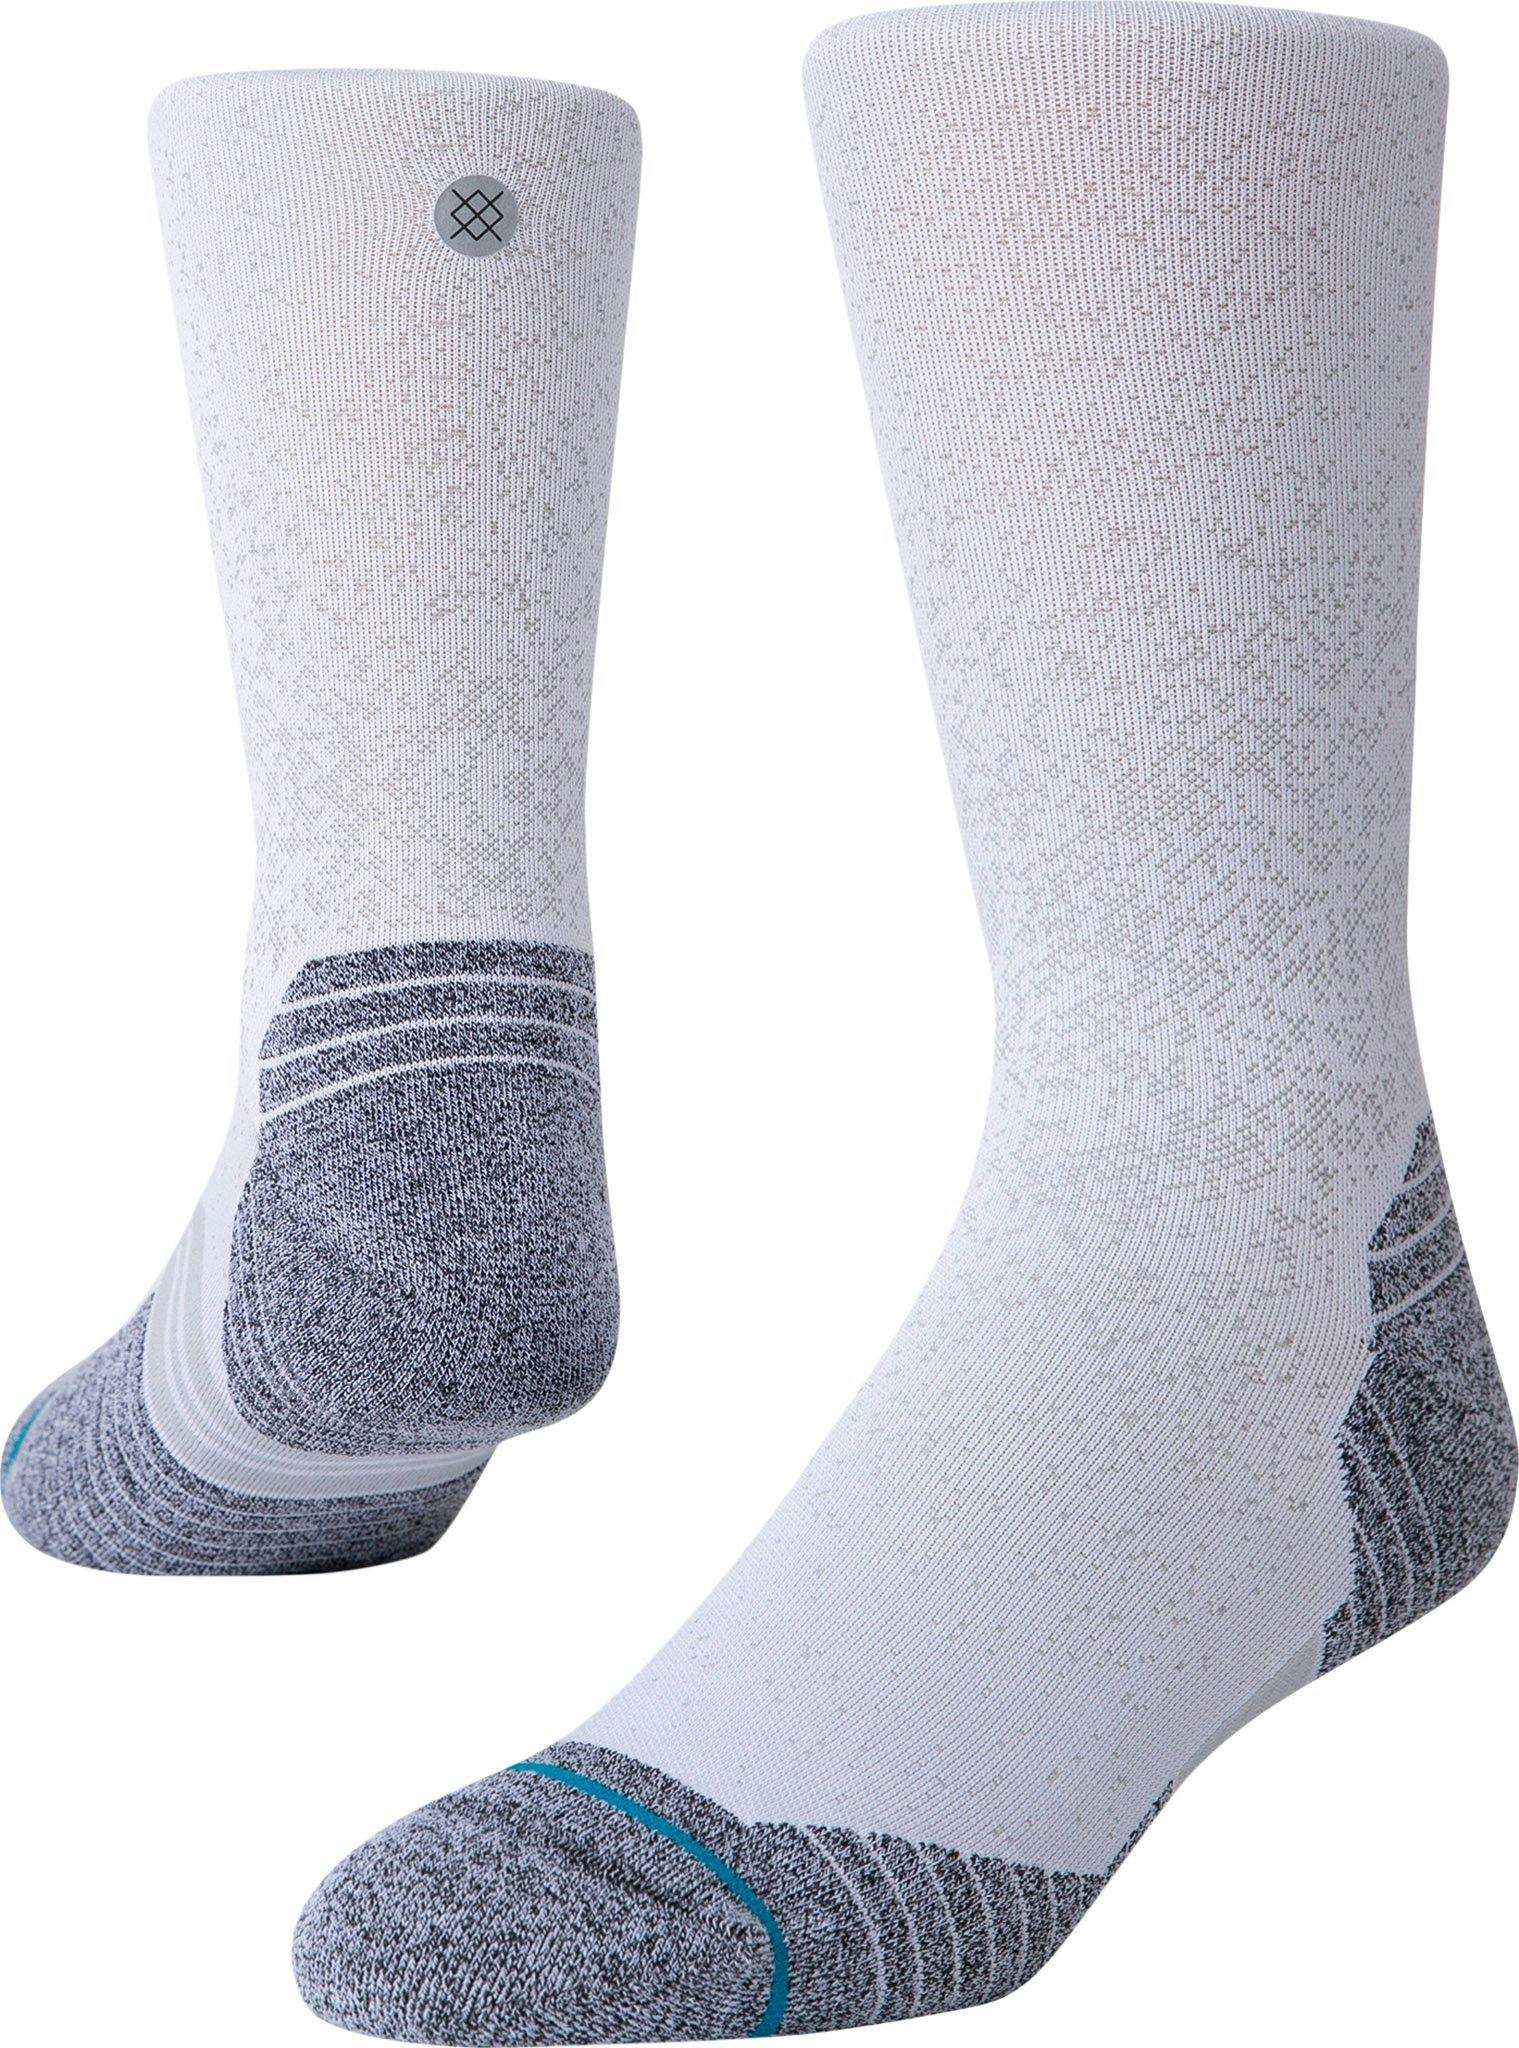 Product image for Run Light Crew Socks - Unisex